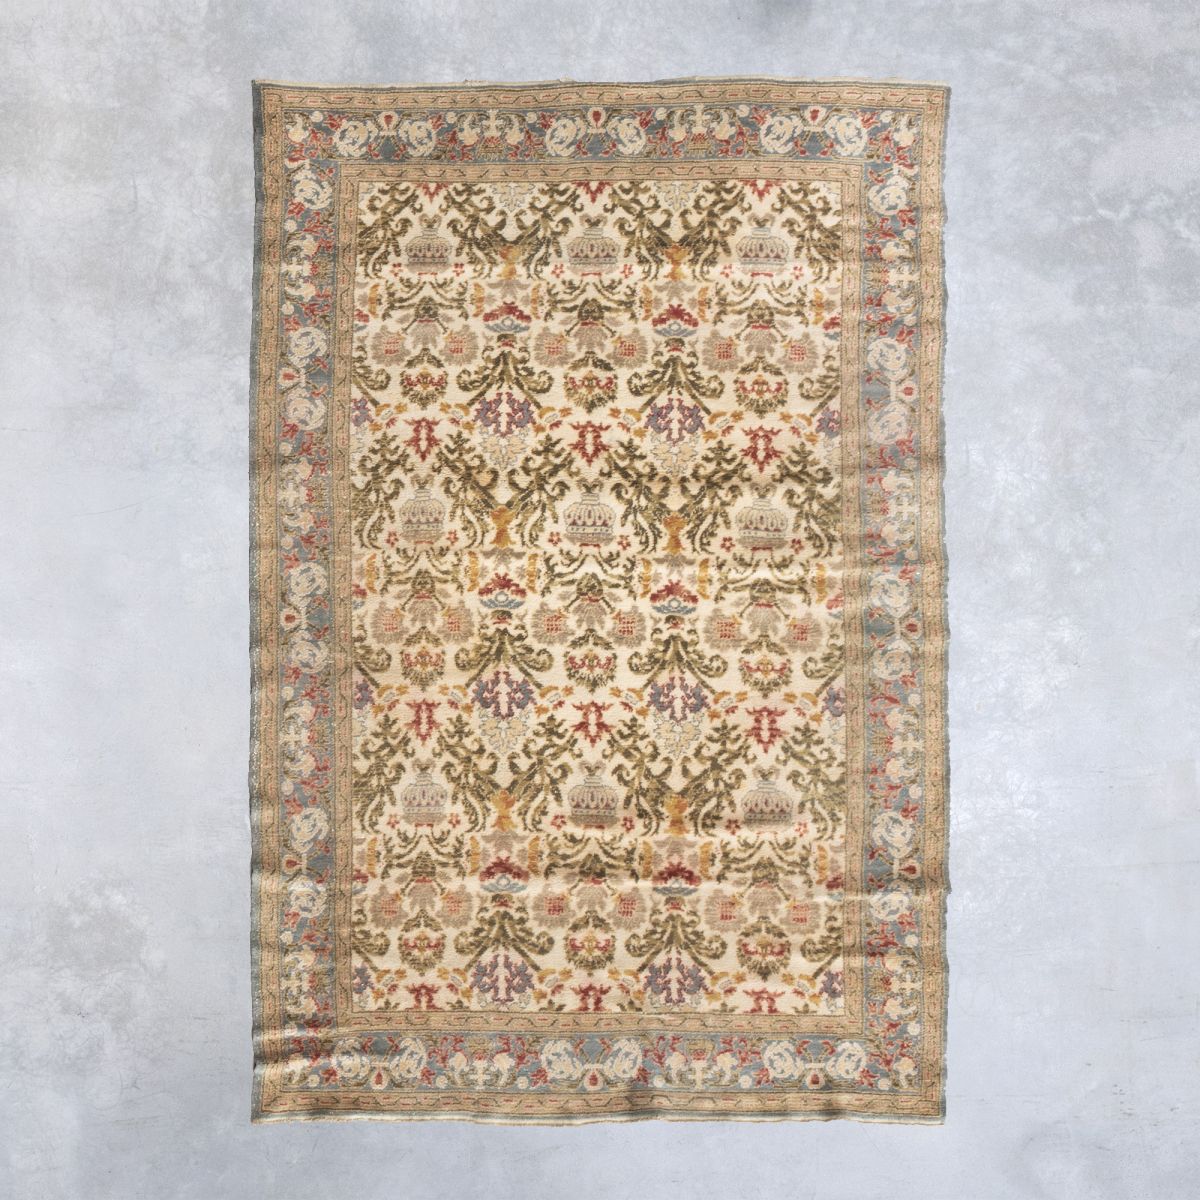 Cuenca carpet | 294 x 195 cm Antique carpets - Spain  pic-1